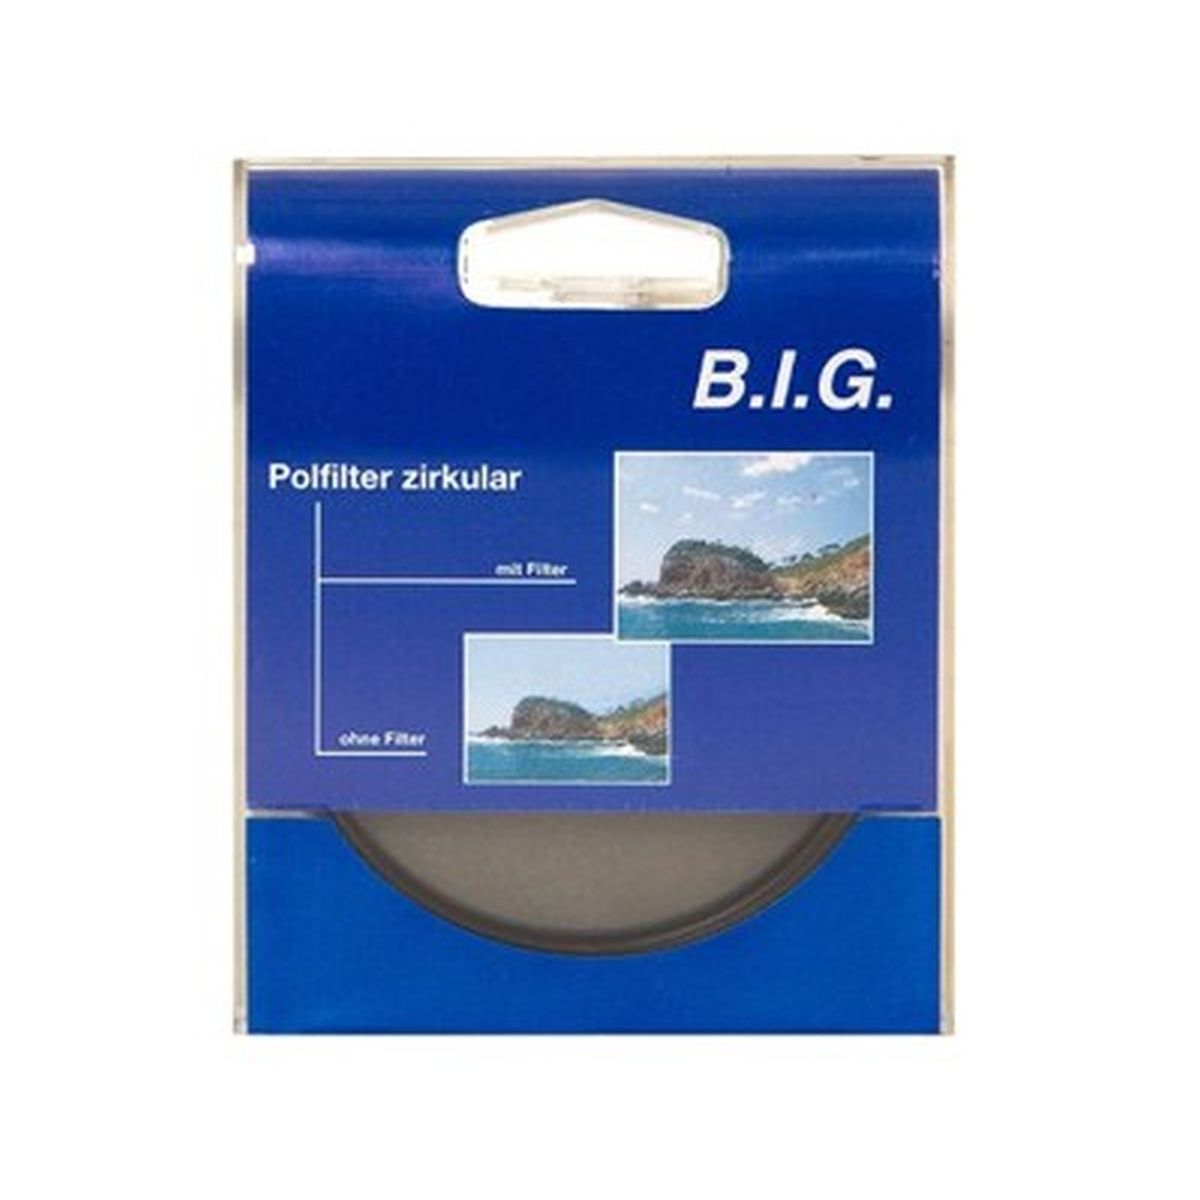 B.I.G. Polfilter zirkular 49 mm